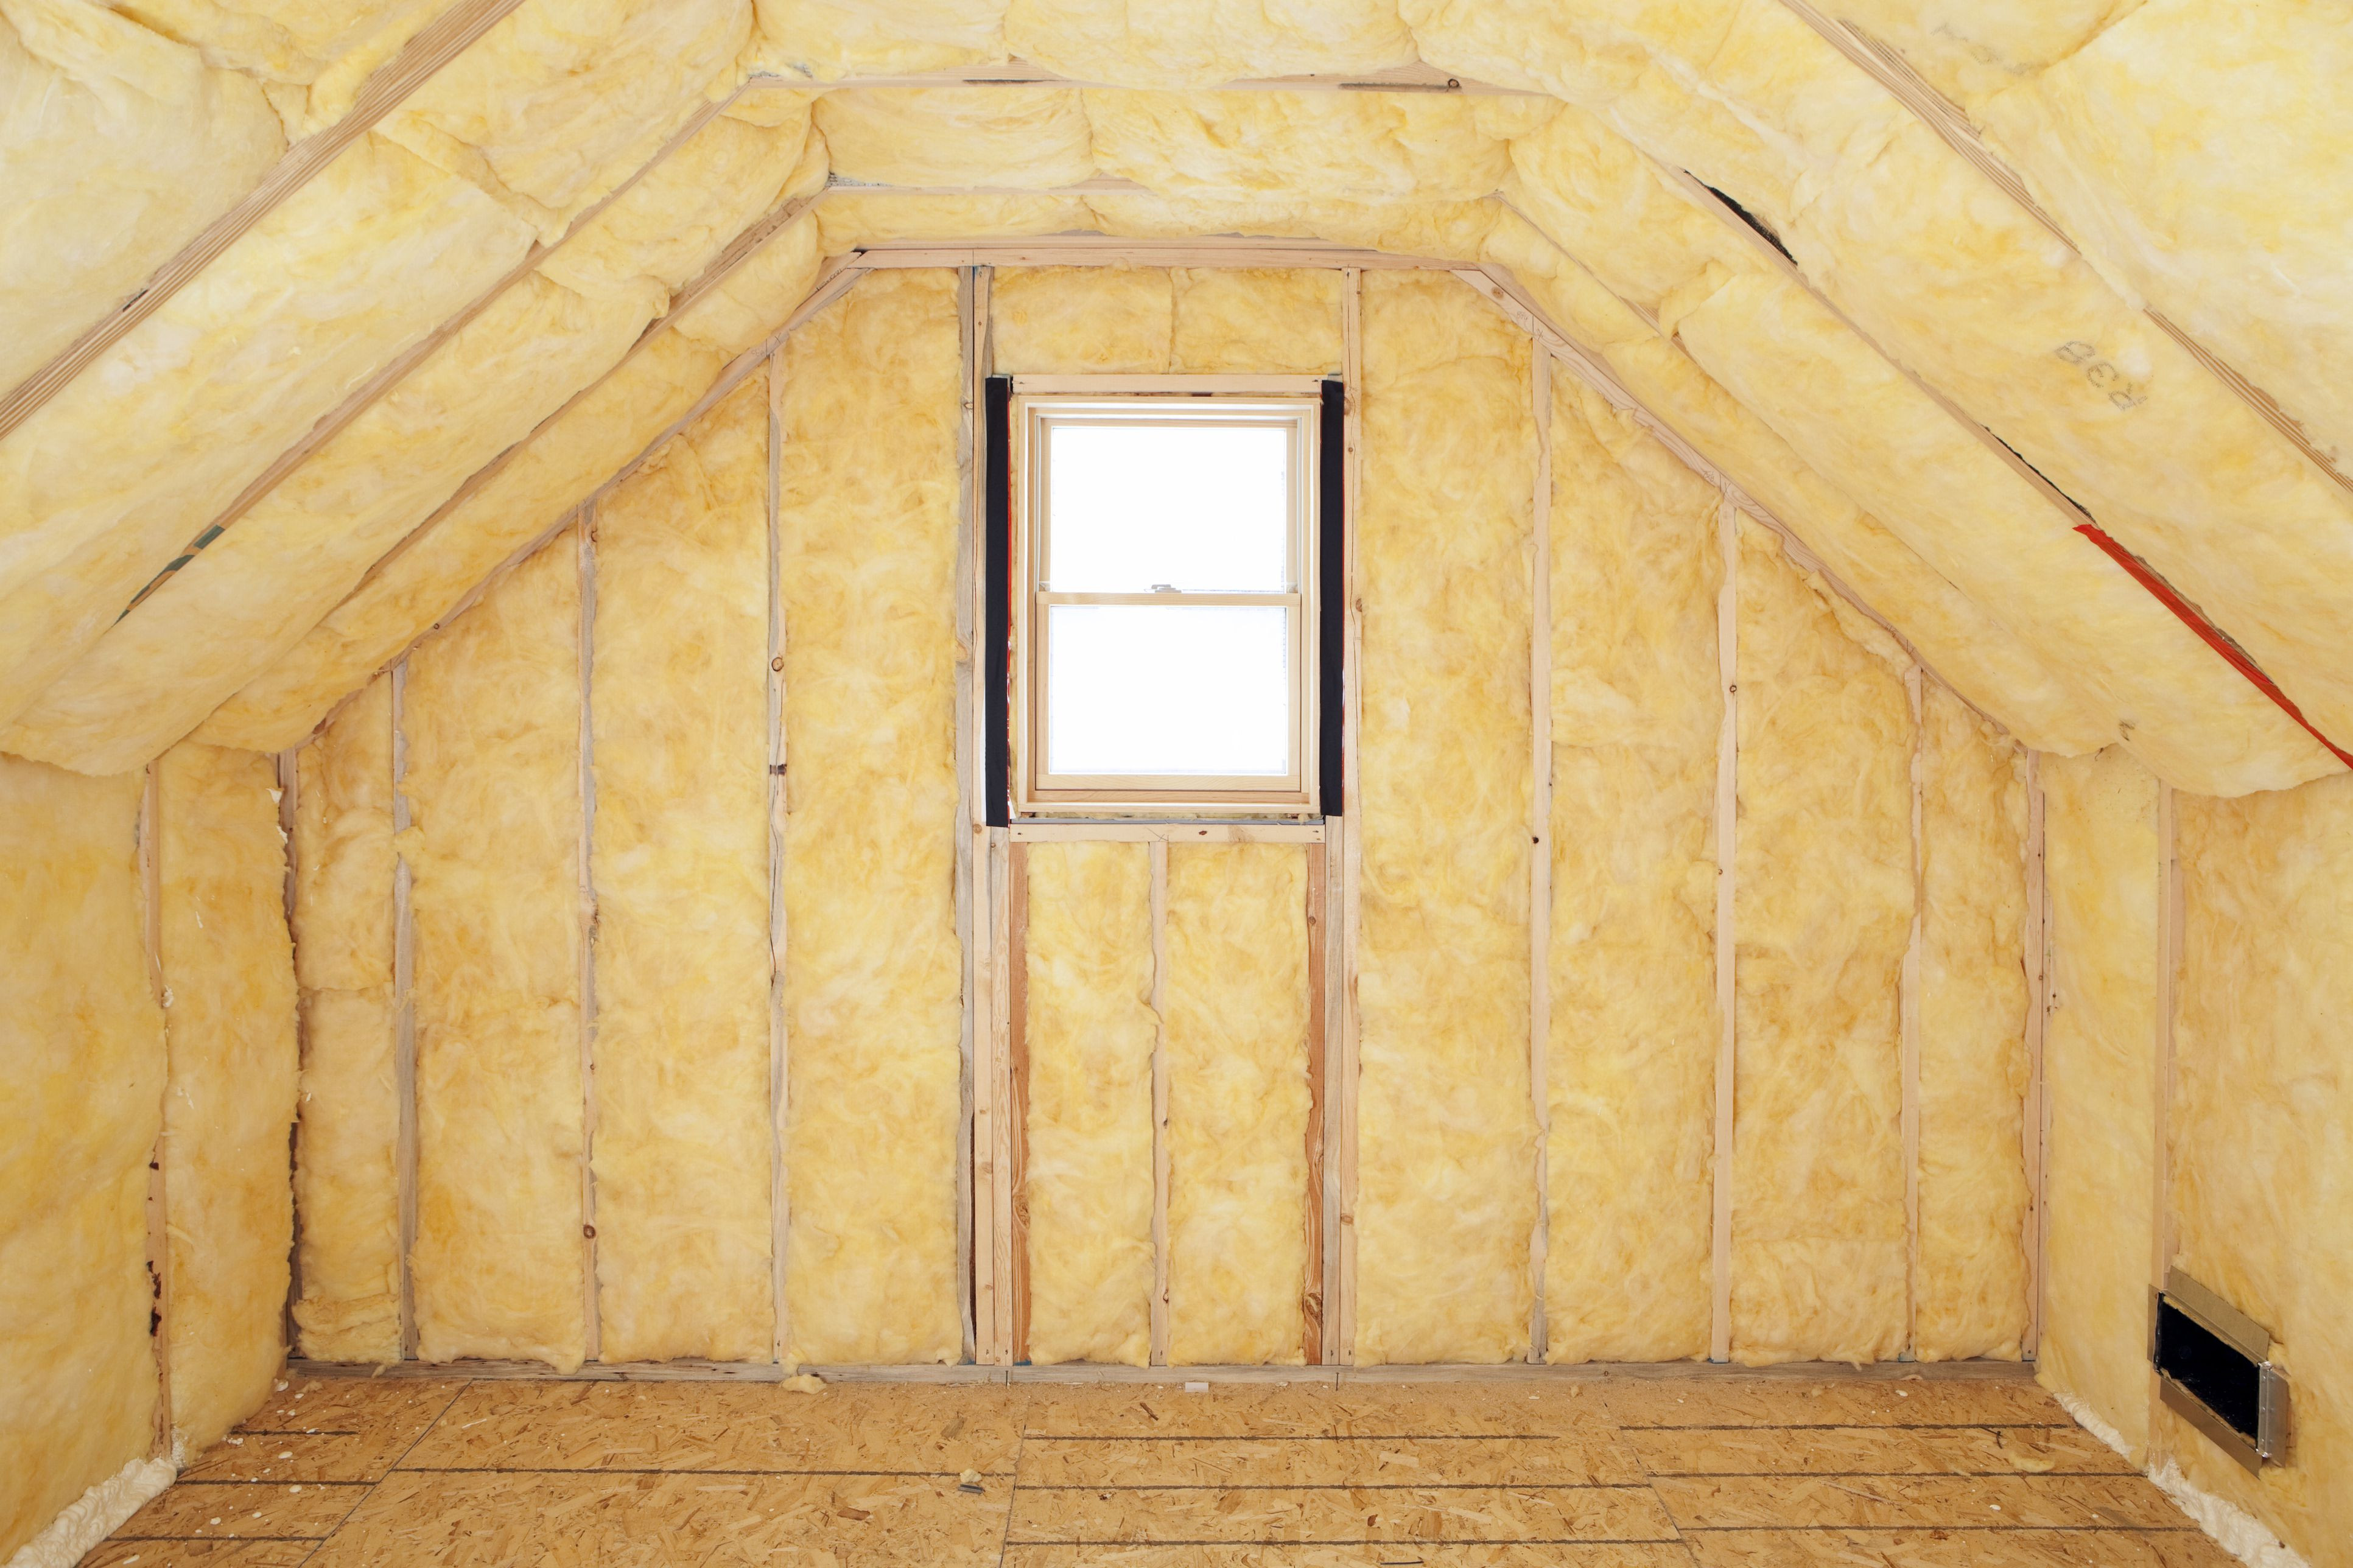 30 Best S M Hardwood Flooring 2024 free download s m hardwood flooring of how to build attic flooring intended for attic room insulation frame and window 185300643 57f64f883df78c690ffbfcb9